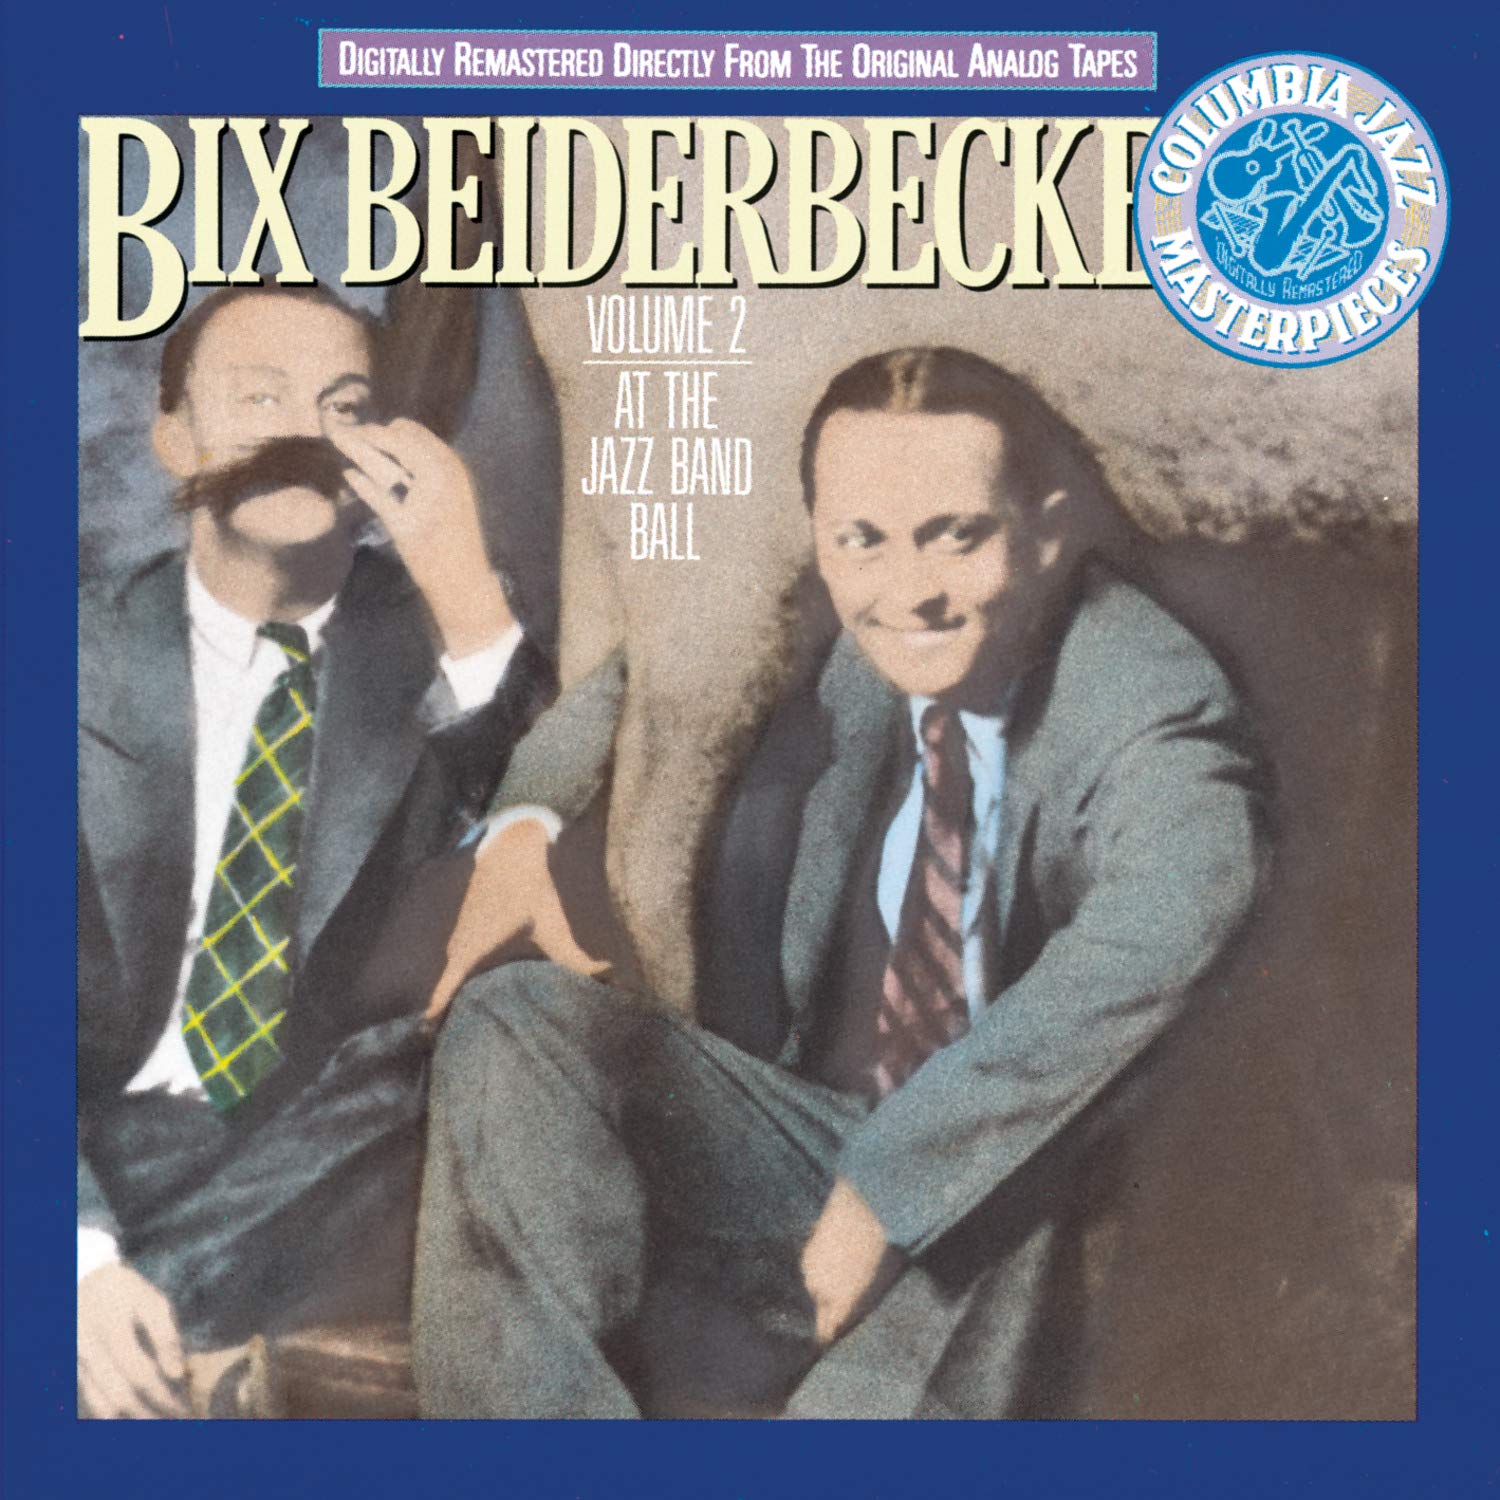 Bix Beiderbecke- Vol. 2: At The Jazz Band Bill - Darkside Records